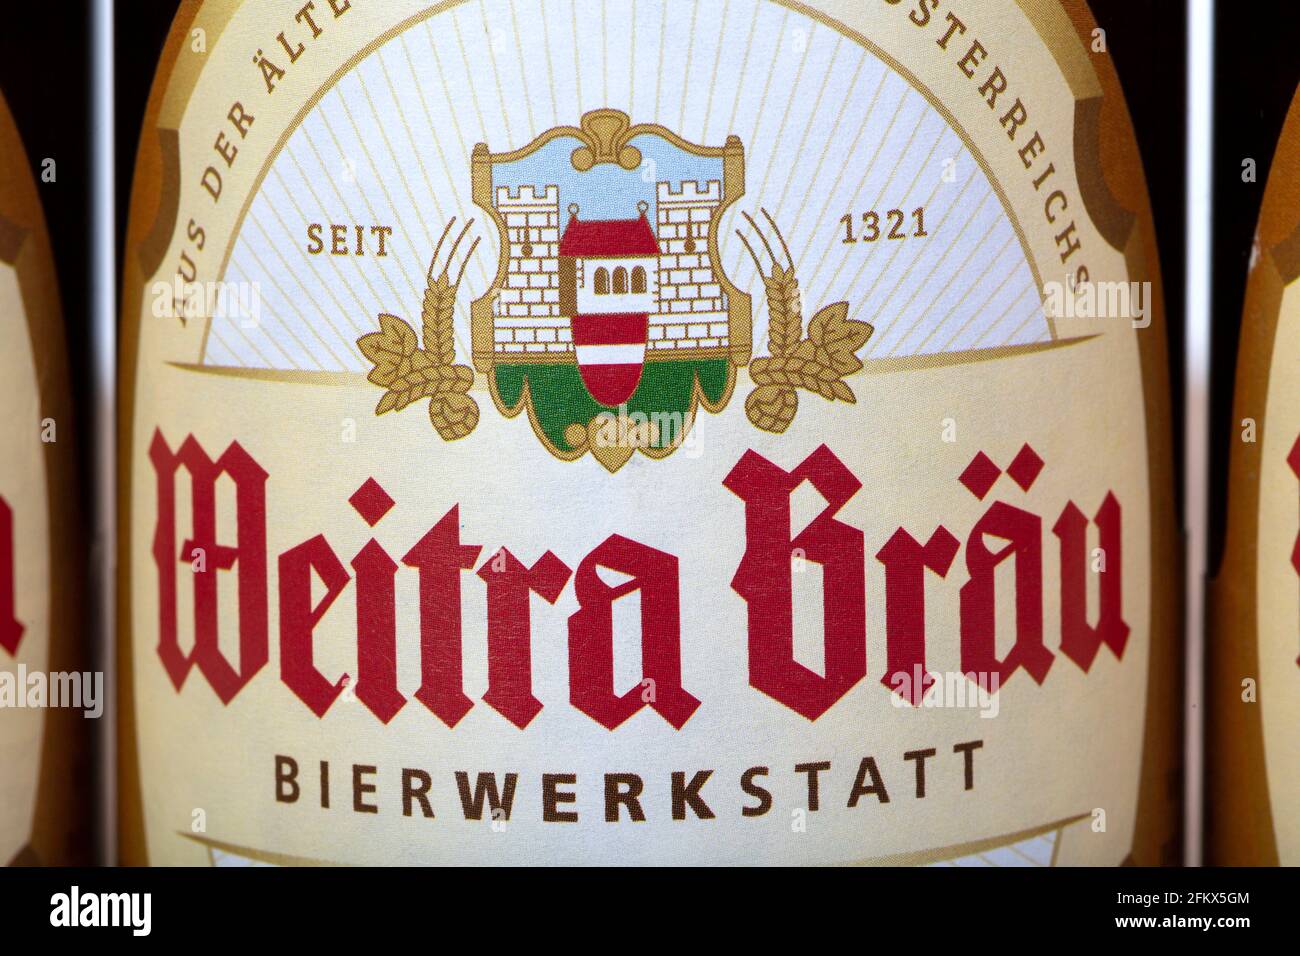 Weitra Bräu, Private Brewery Weitra, Austria Stock Photo